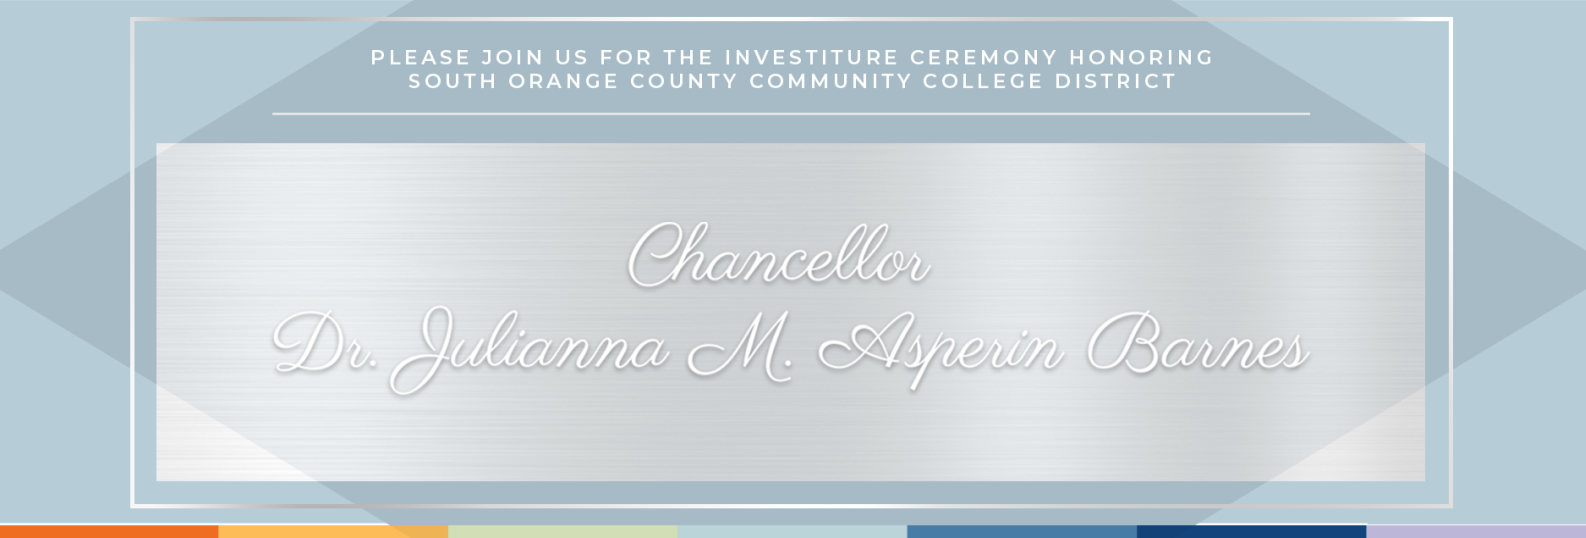 Please join us for the investiture ceremony honoring SOCCCD Chancellor Dr. Julianna M. Asperin Barnes